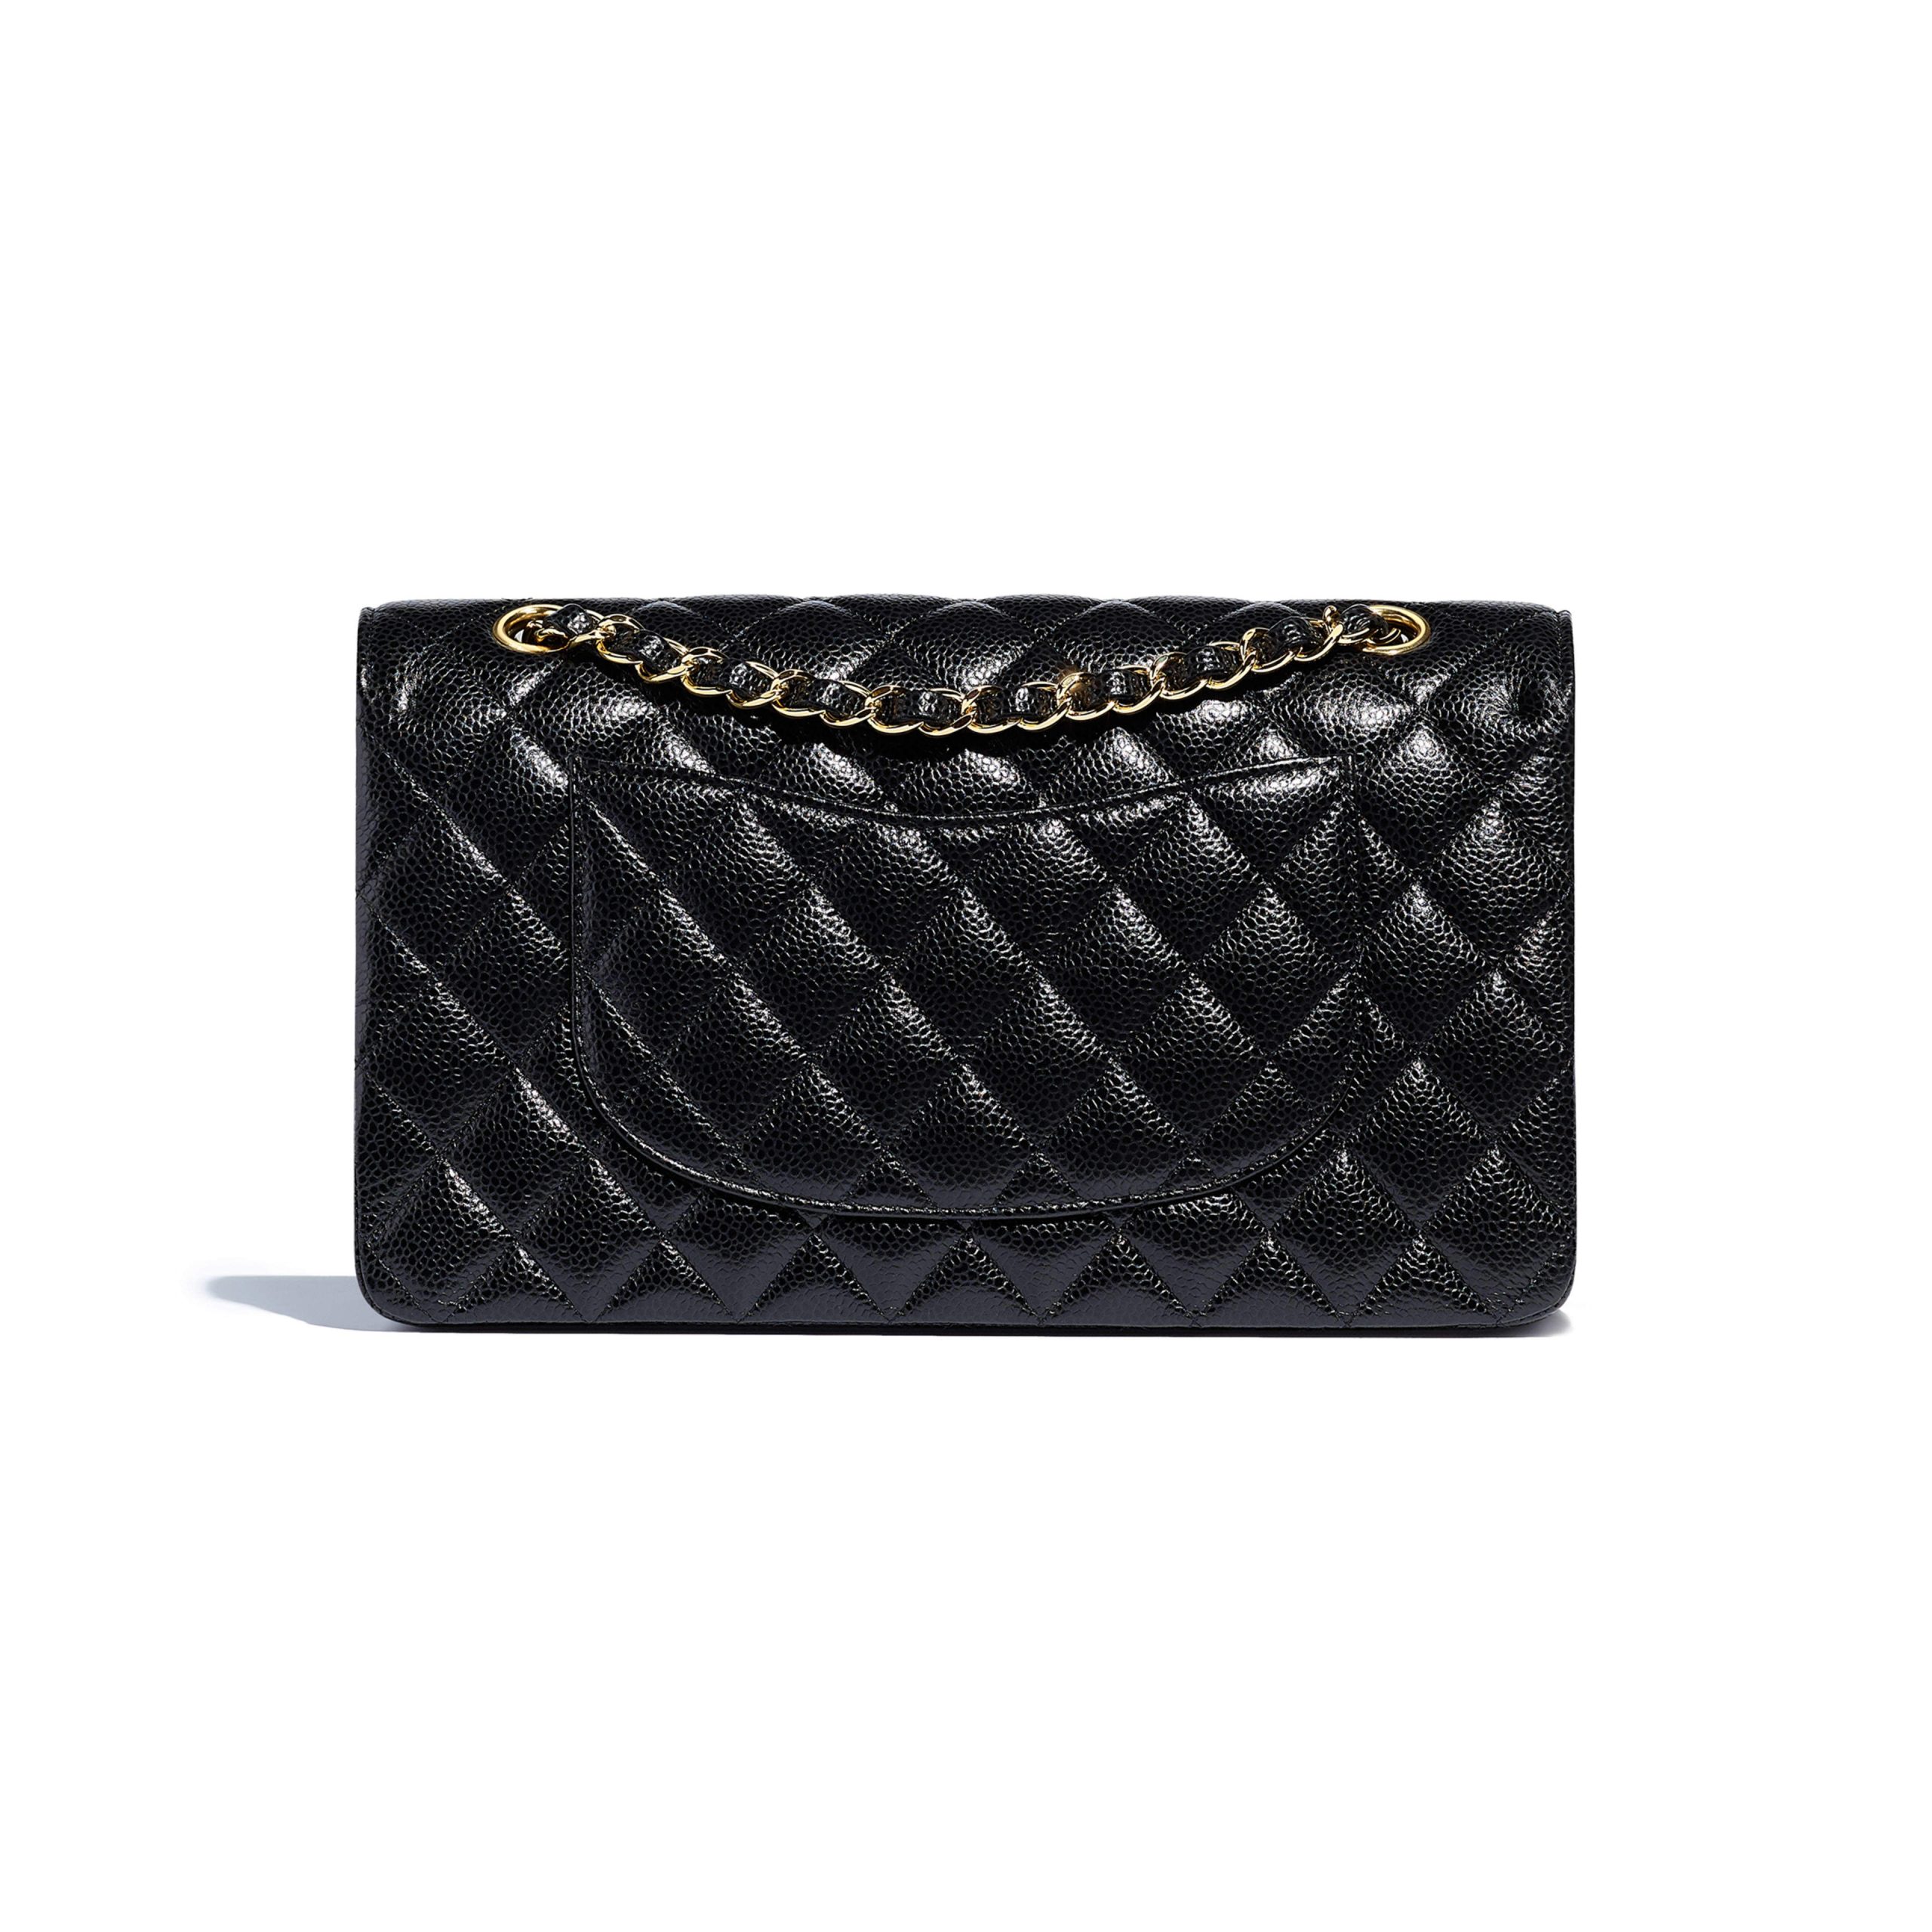 The Chanel Classic Handbag